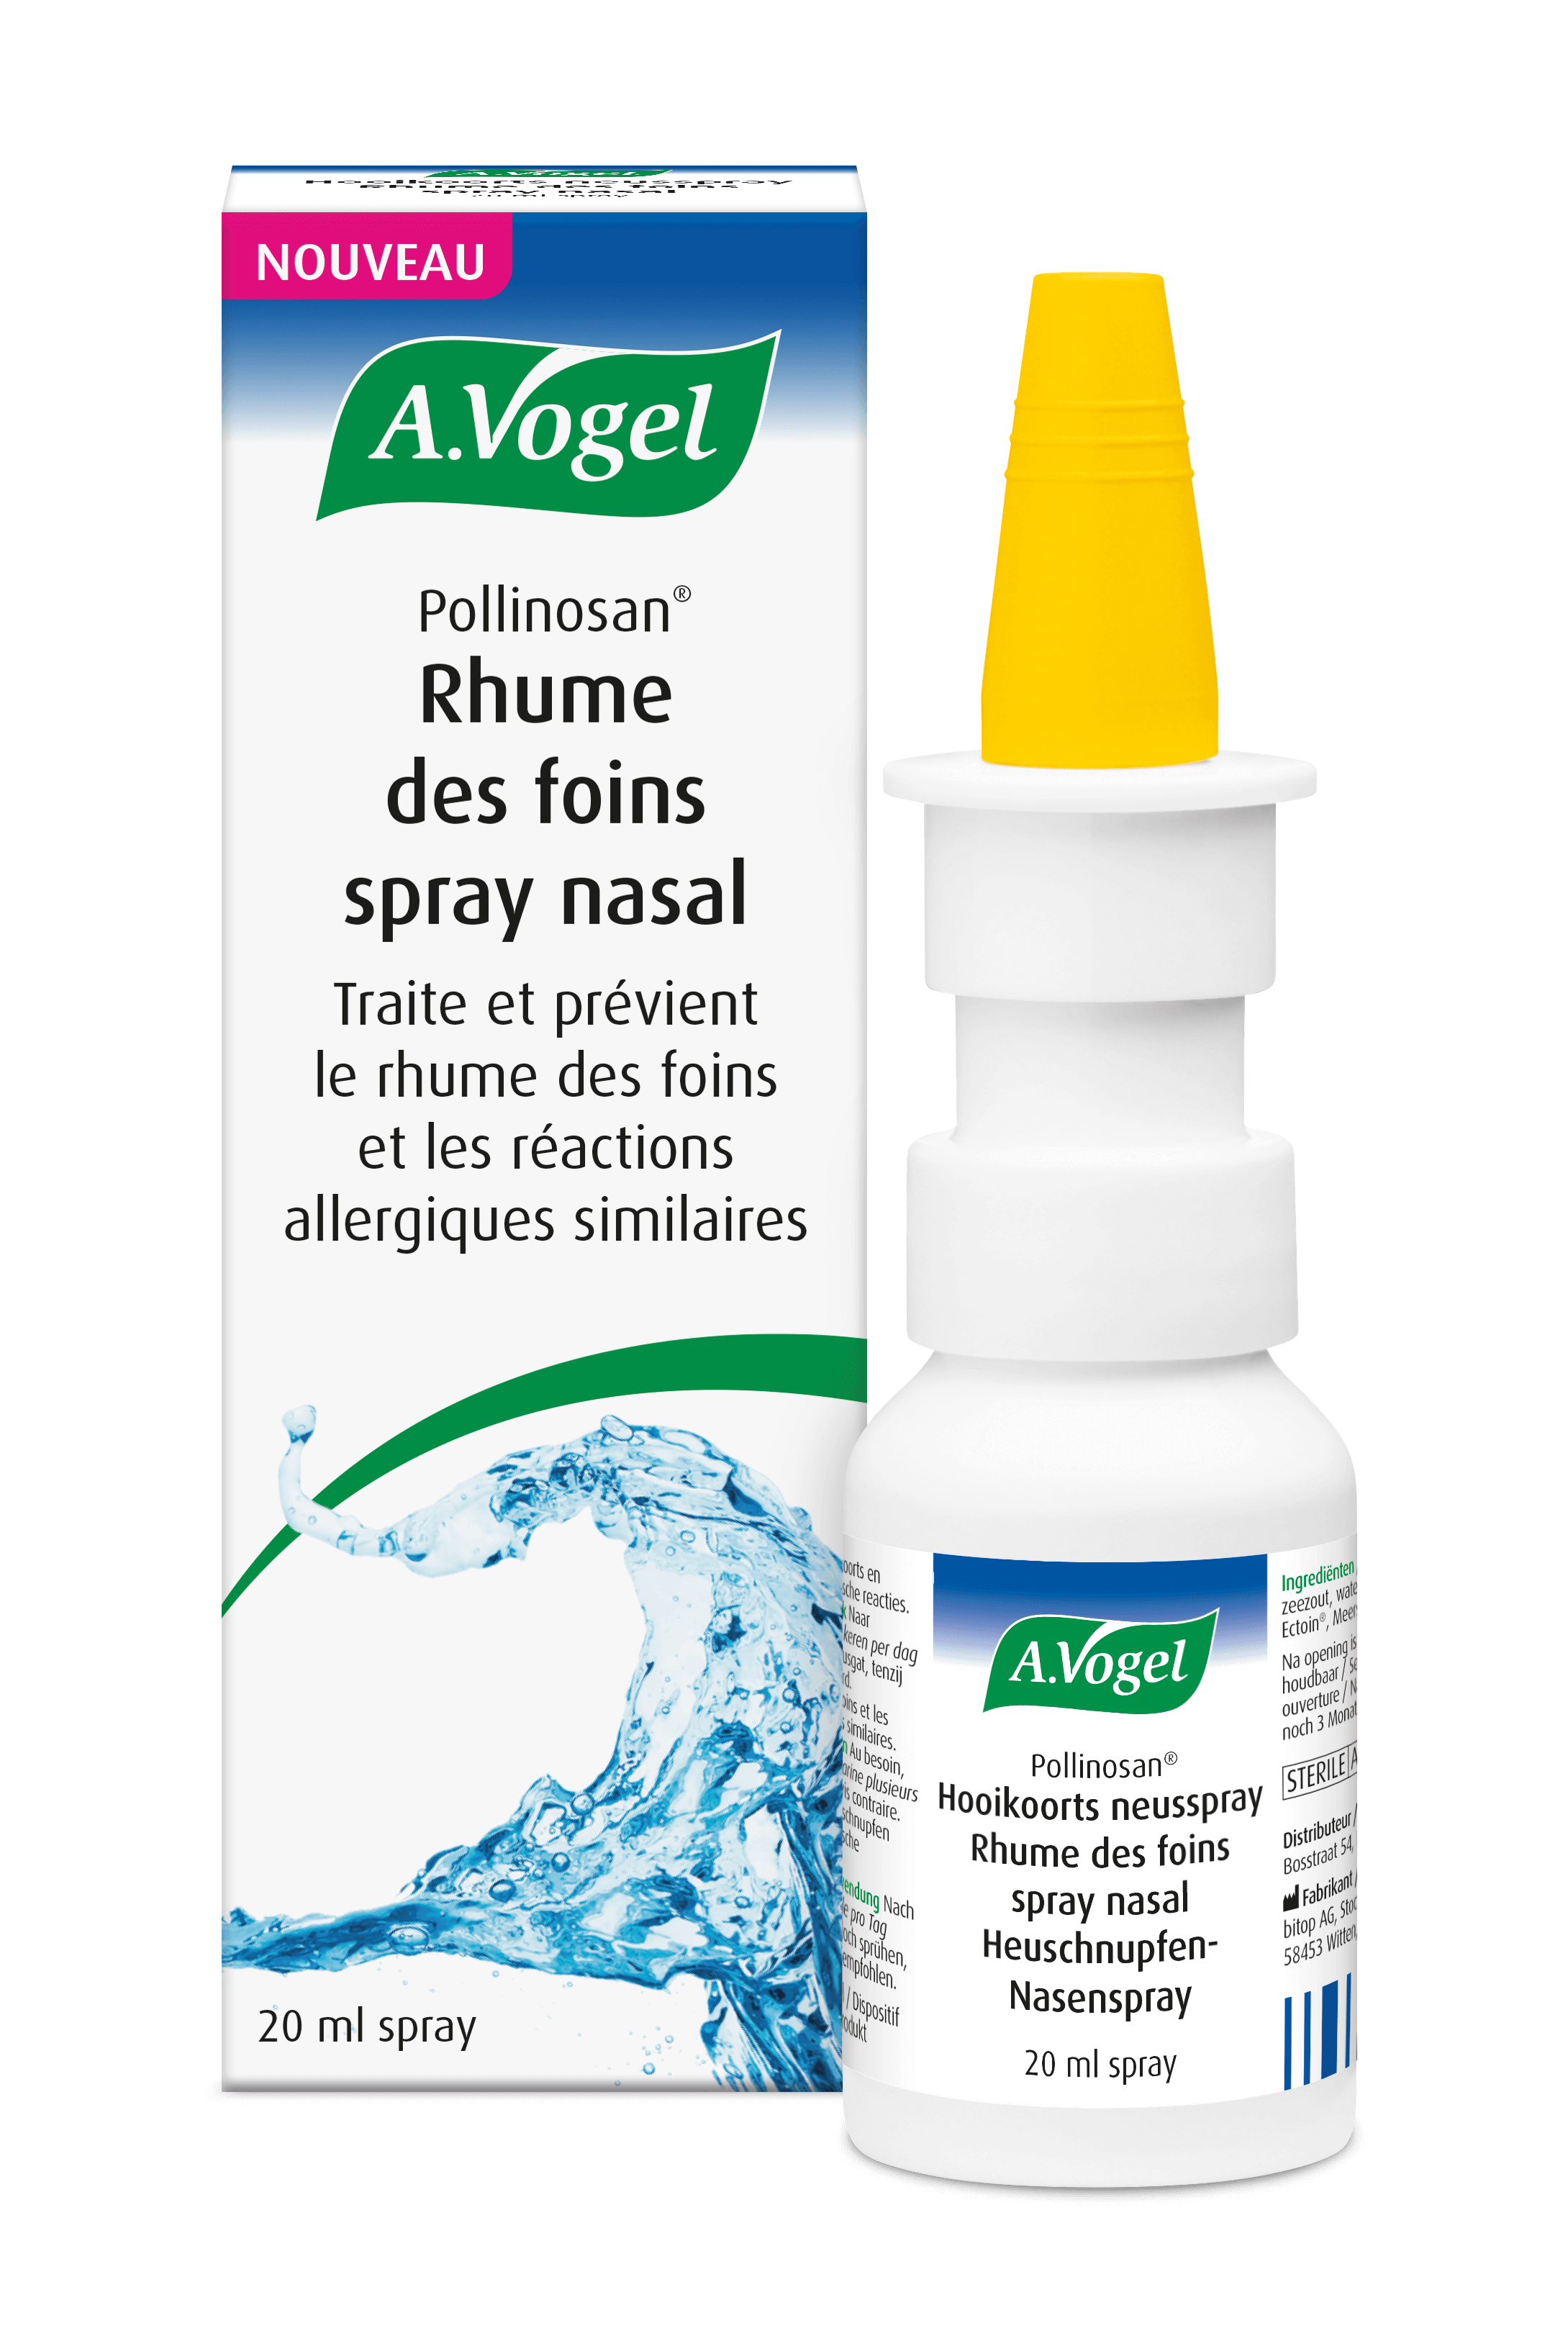 Pollinosan Spray nasal Rhume des foins DSSP